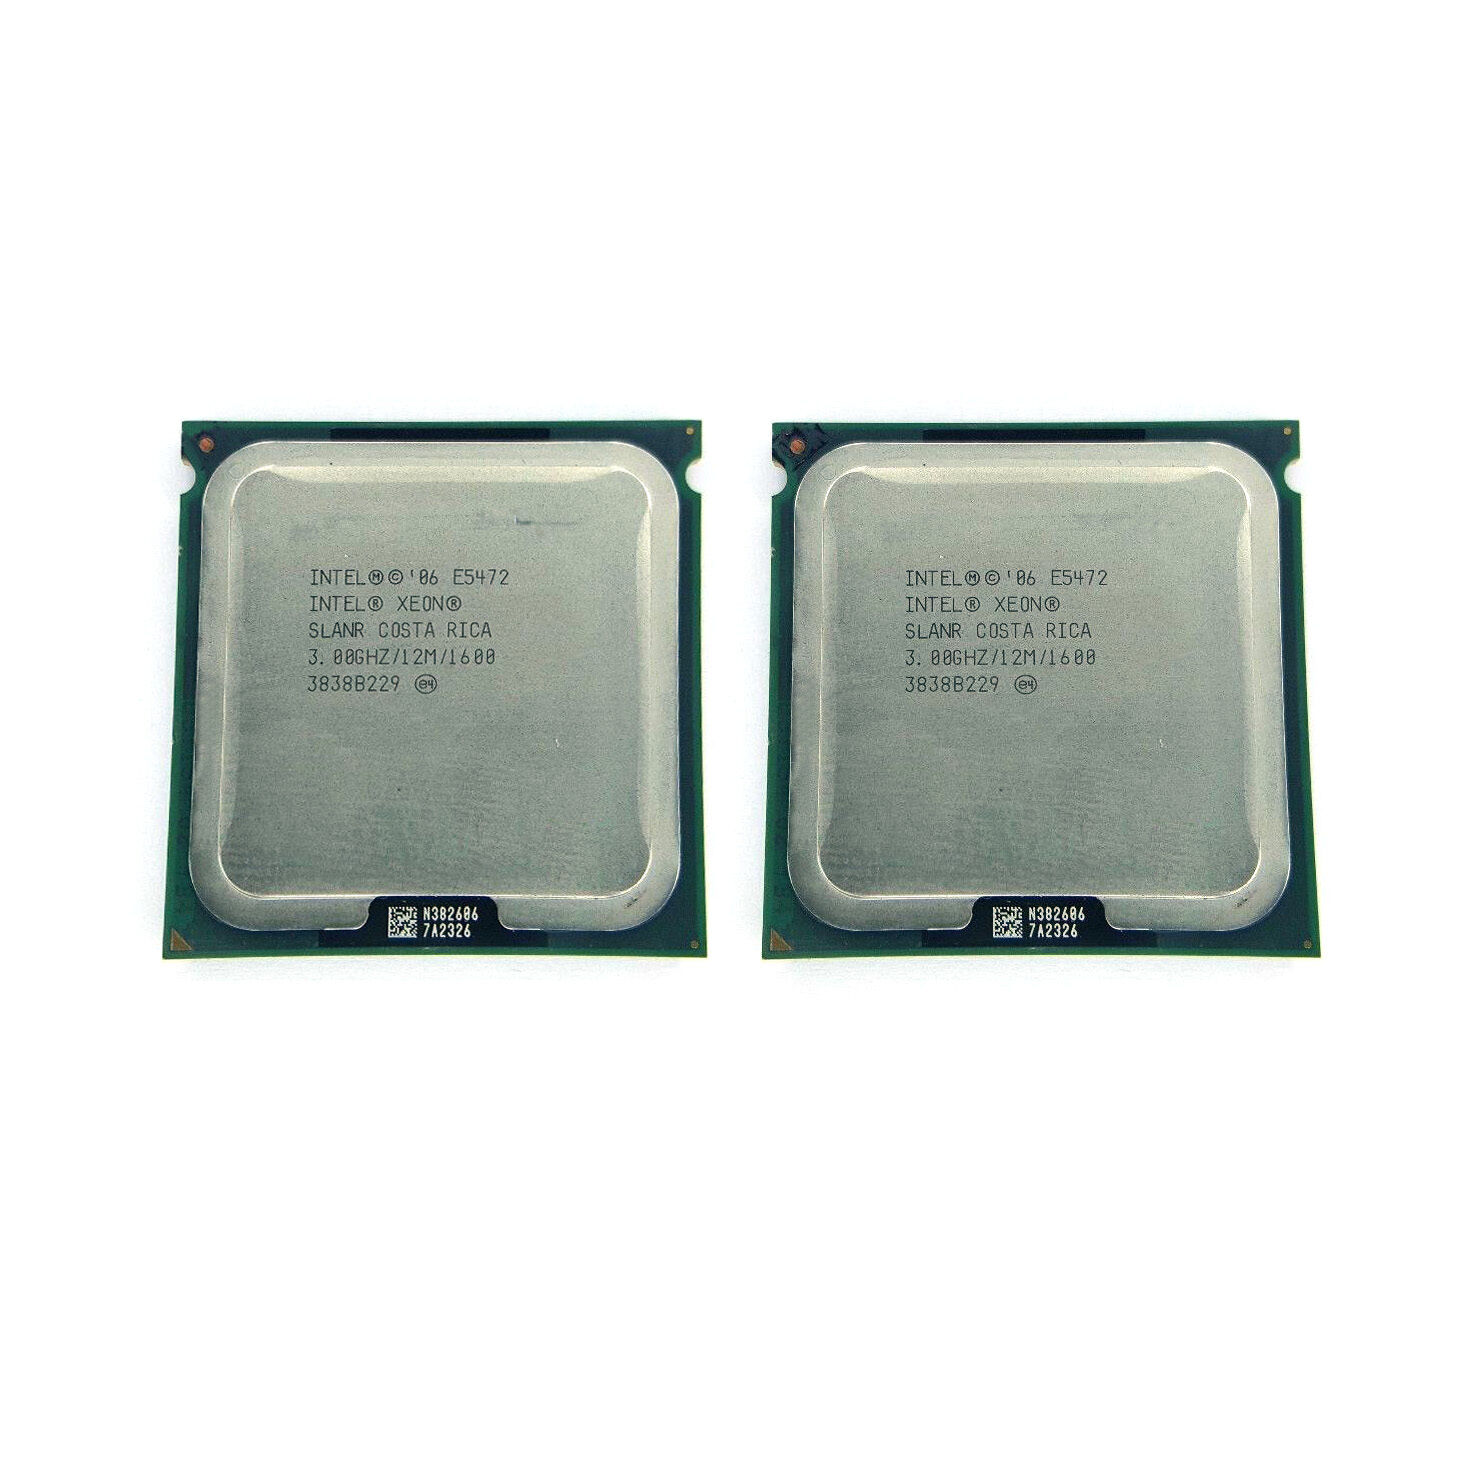 2 pcs Intel Xeon E5472 3 GHz 12MB 1600MHz Quad-Core SLANR CPU Matched pair